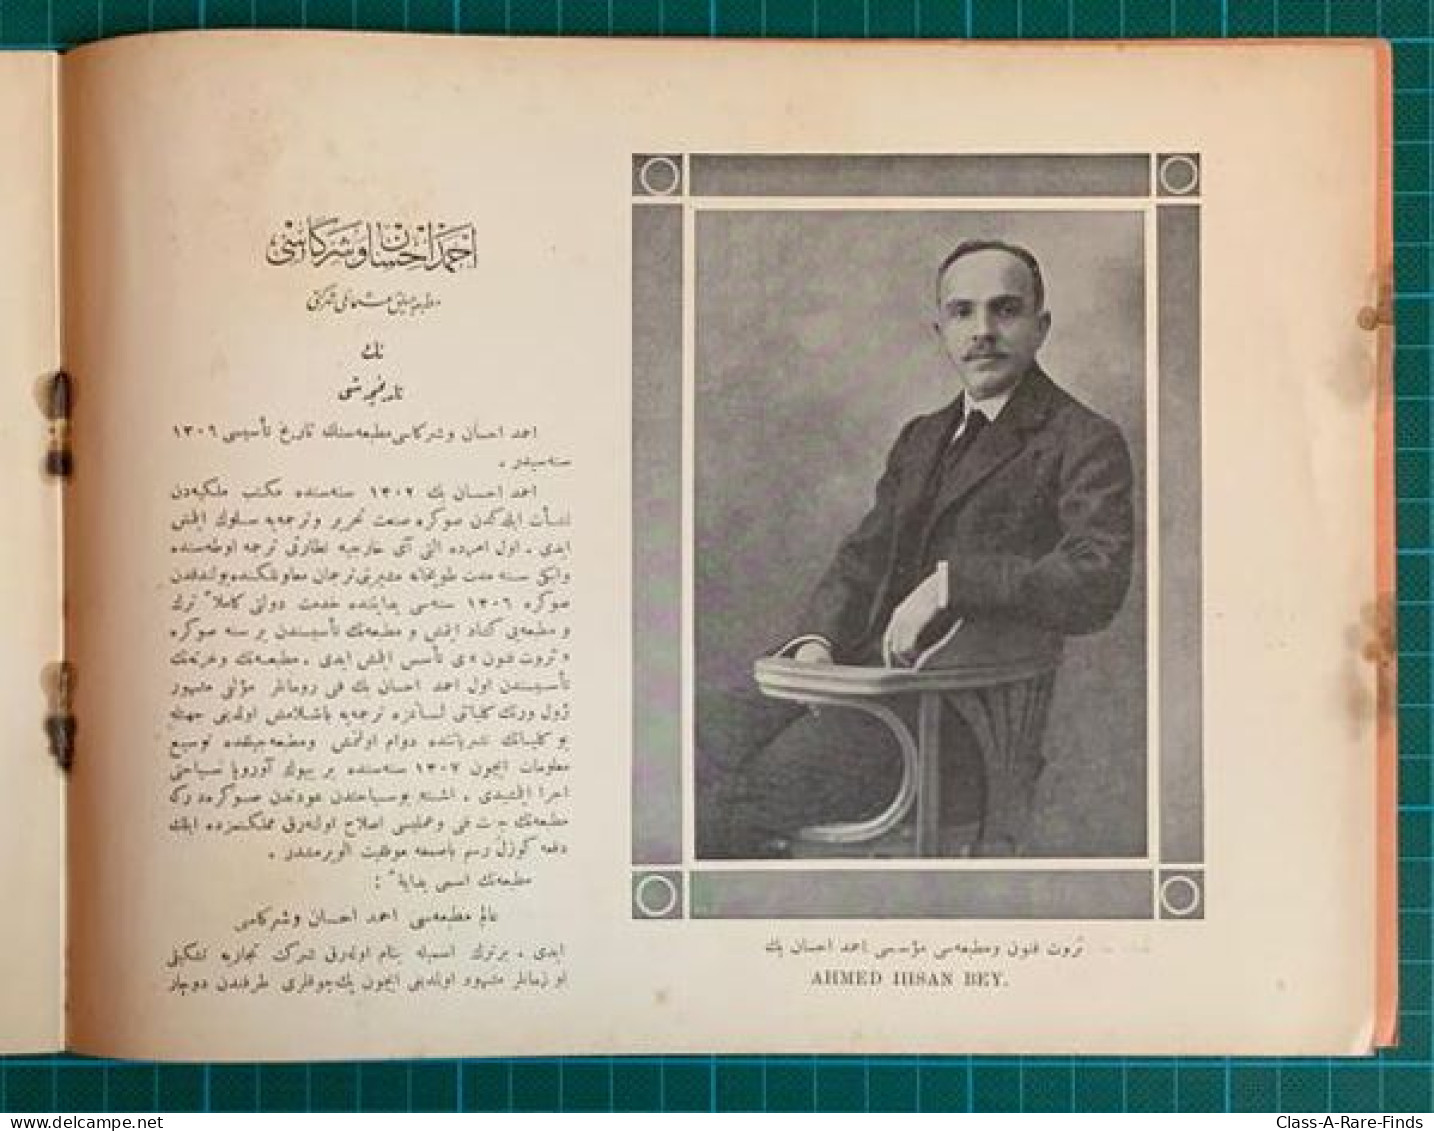 1912, OTTOMAN TURKEY ISTANBUL / AHMED IHSAN PRINTING HOUSE / SERVET-I FUNUN / SERVETIFUNOUN MAGAZINE / BOOKLET - Romans